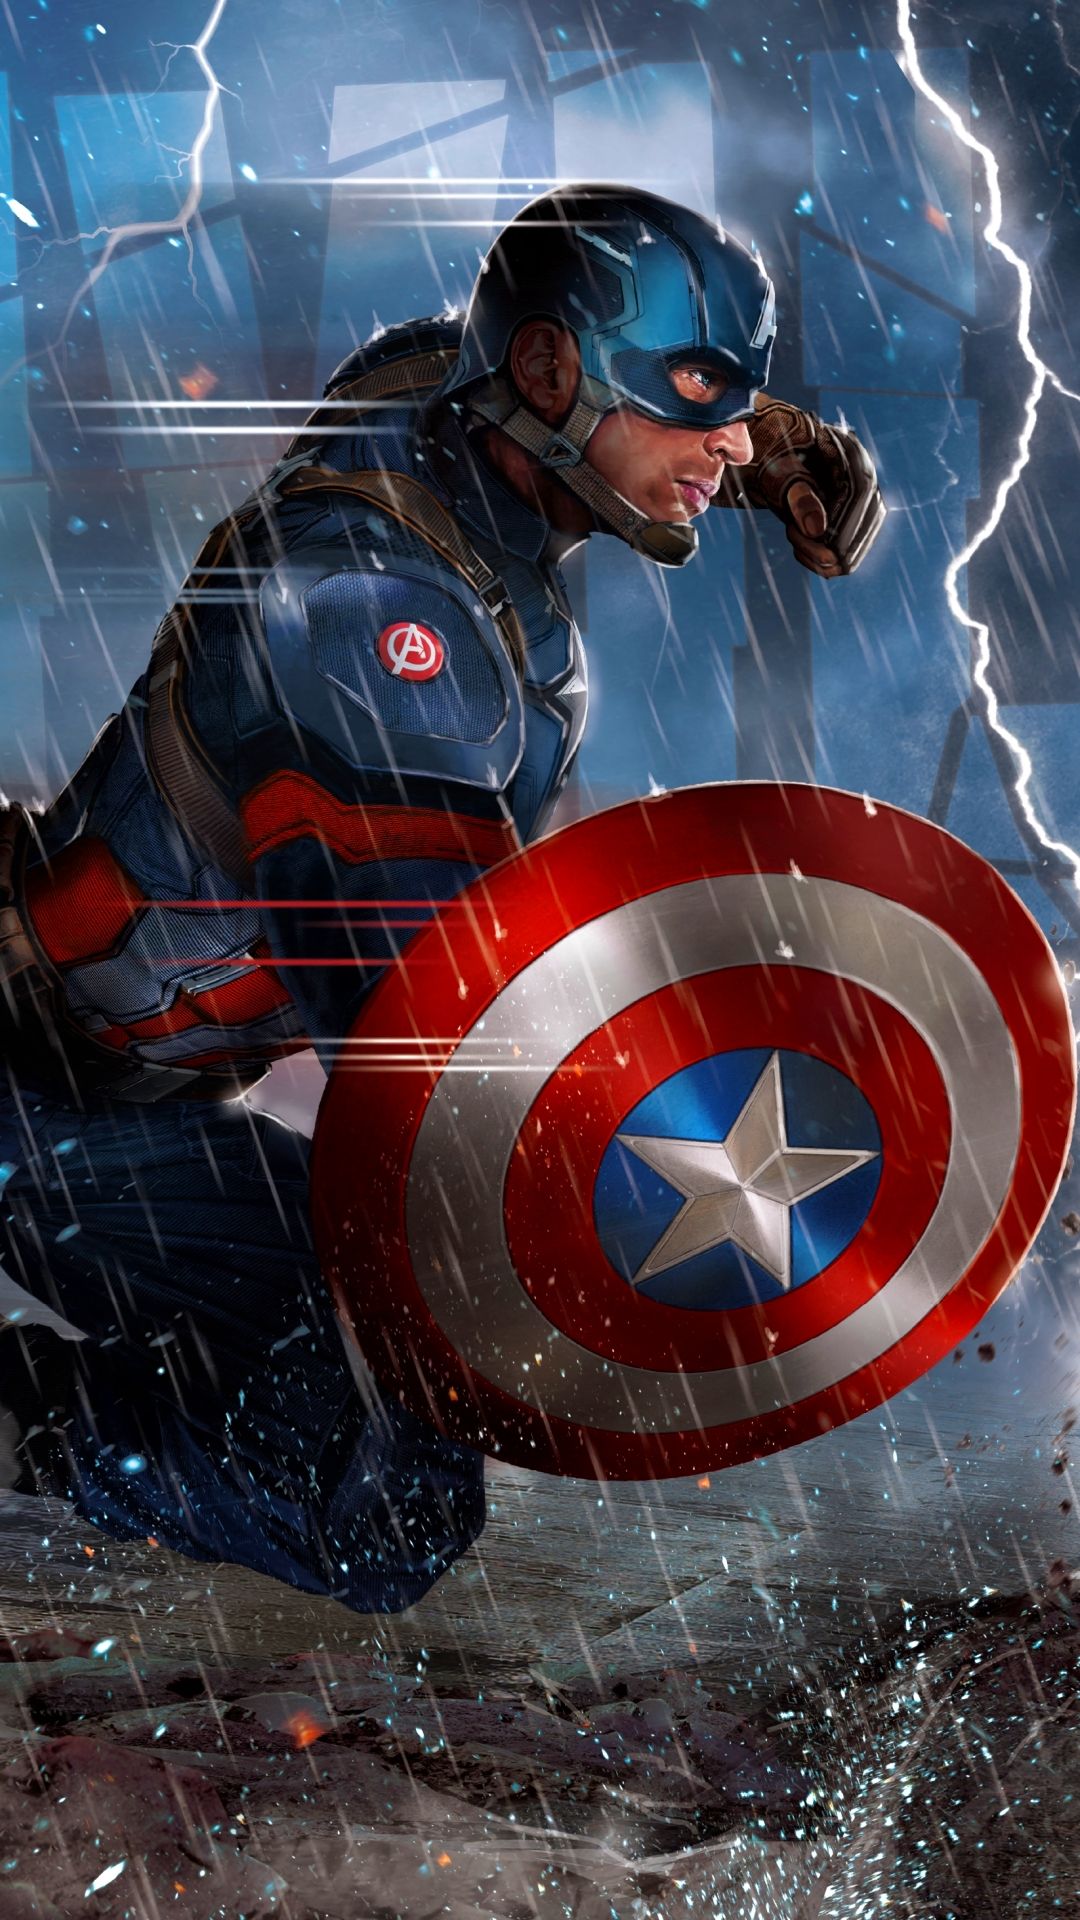 Captain America Phone Background. iPhone